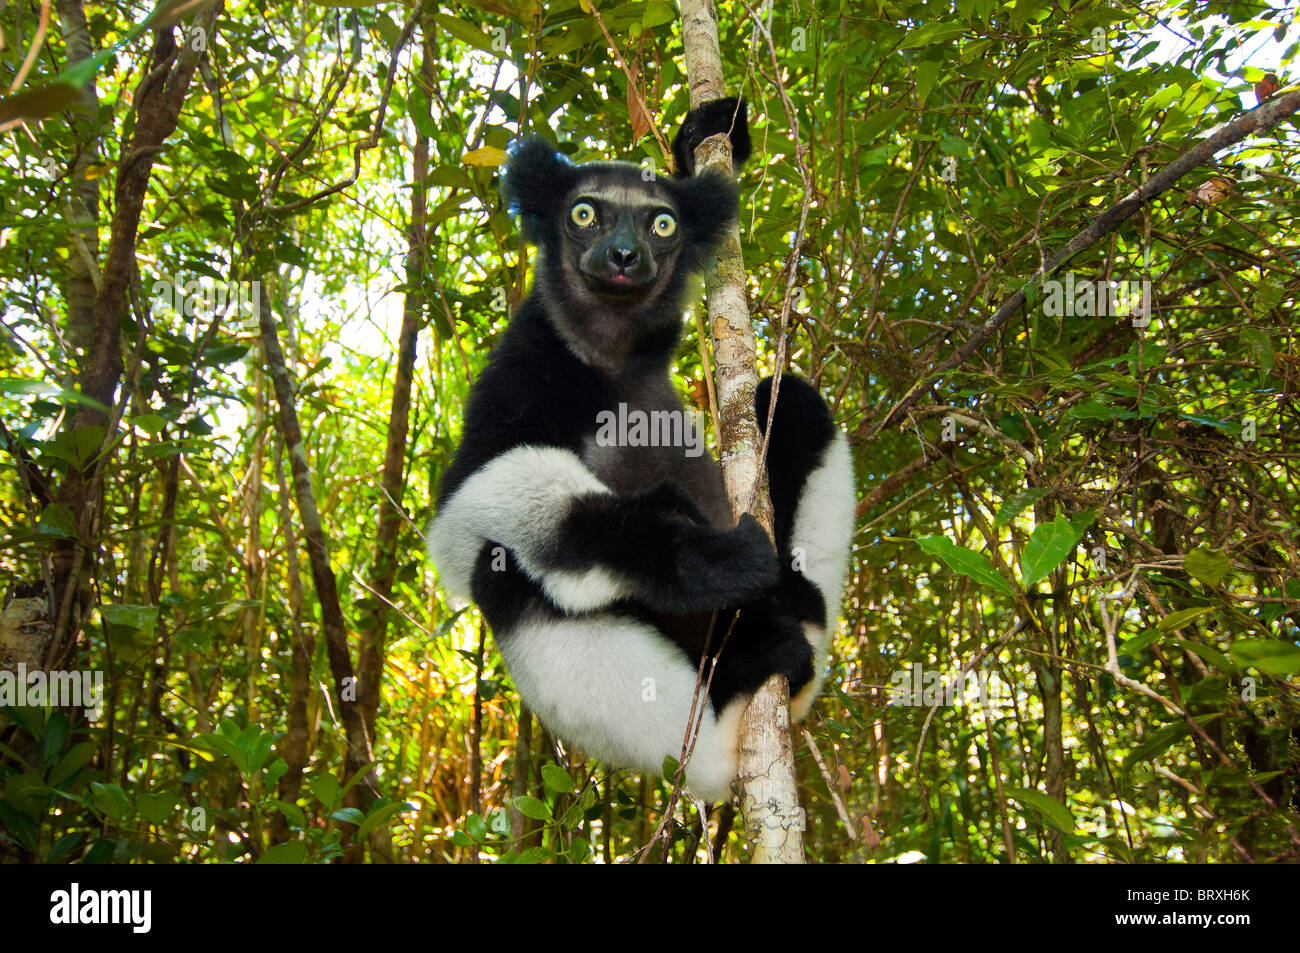 Lemur wildlife Diadem Propithecus diadema edwardsi Sifaka Madagascar Madagascar lemur bosque salvaje selva prosimian árbol Foto de stock